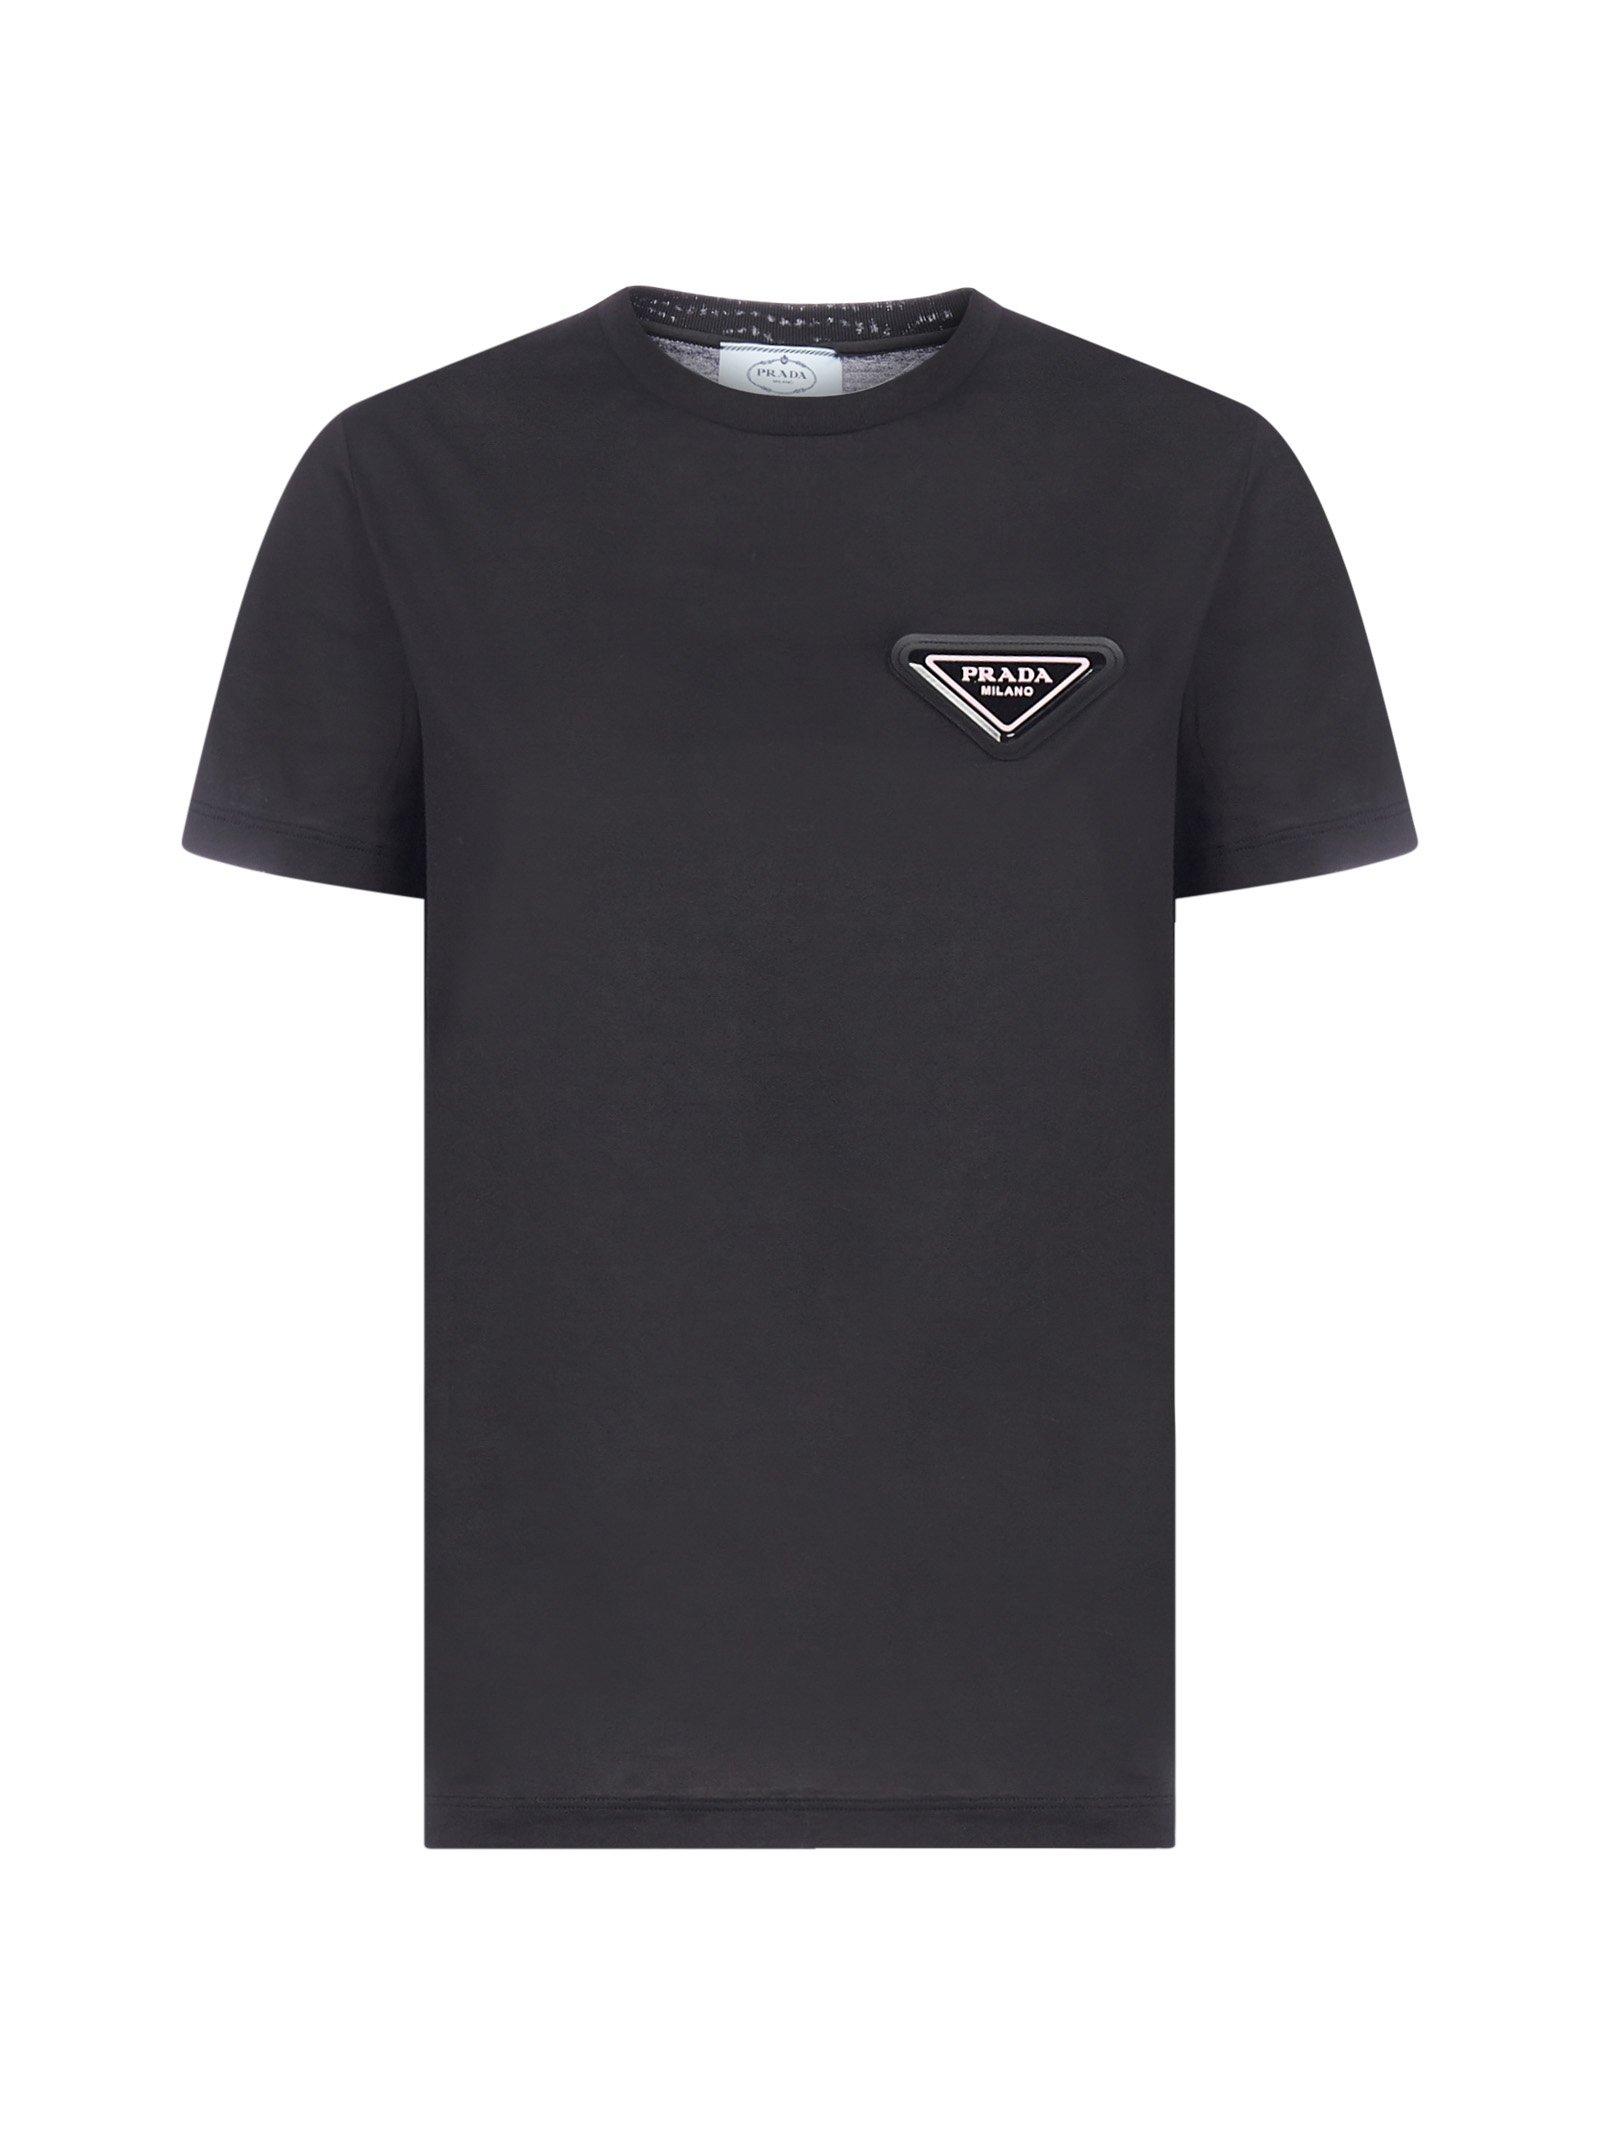 Prada Logo Patch T-shirt in Black | Lyst